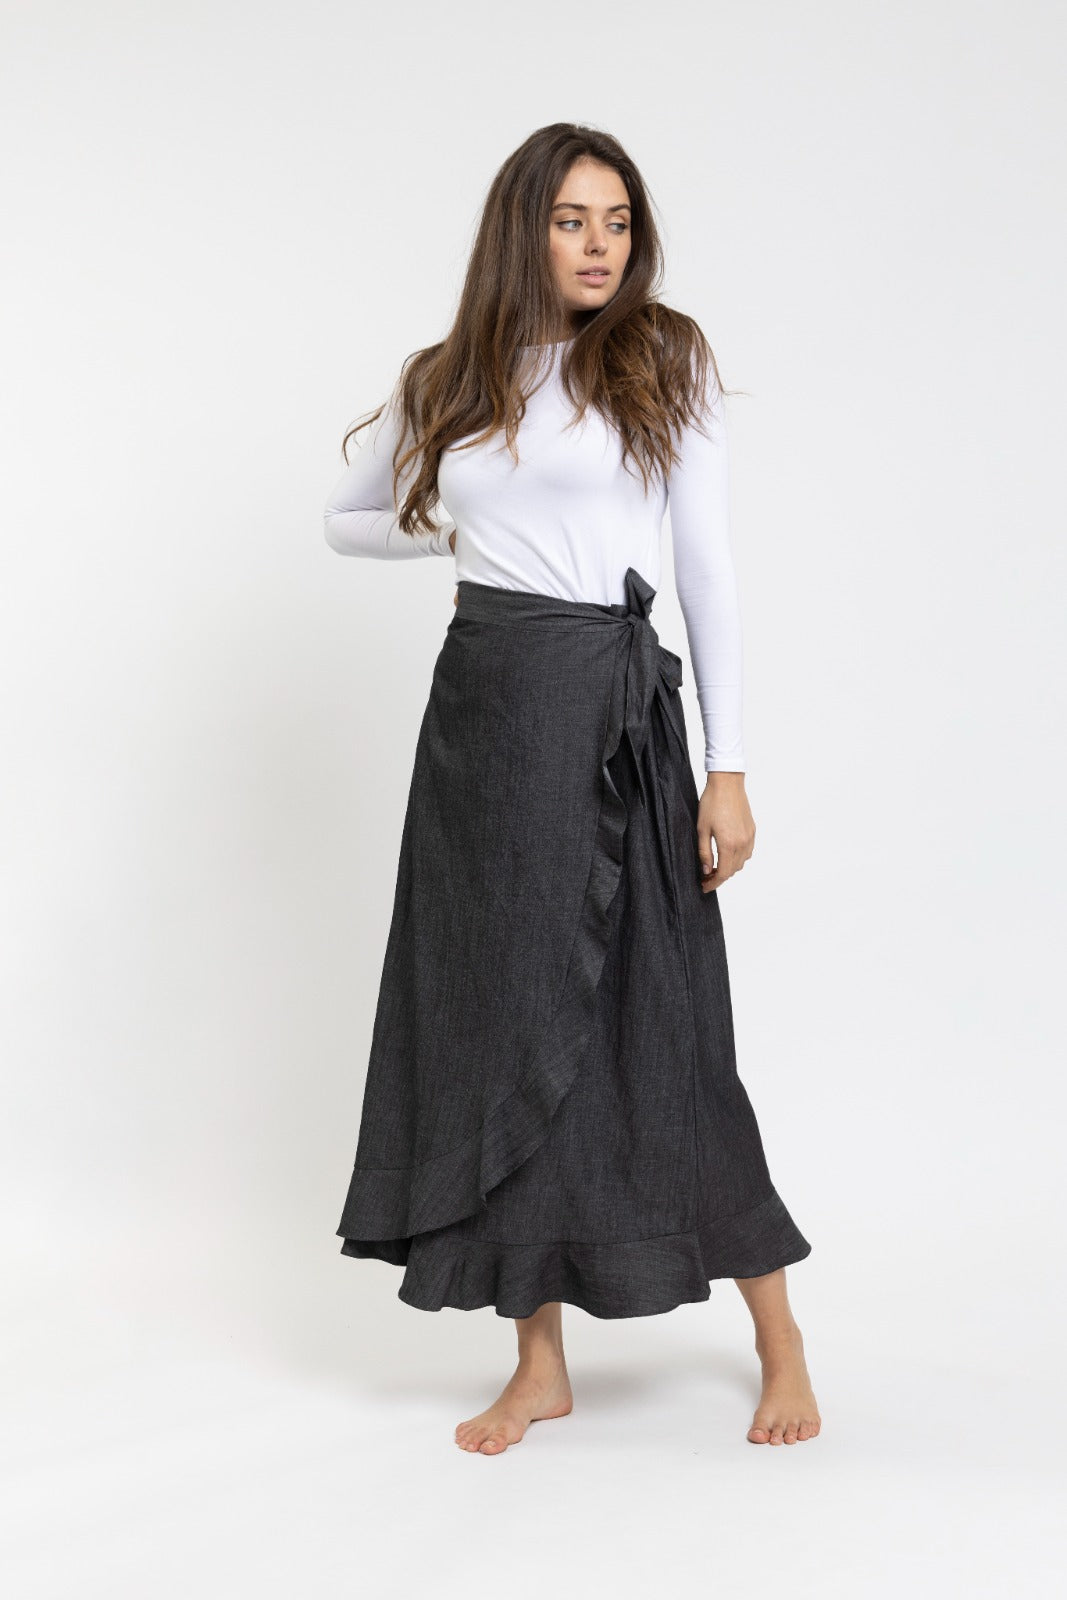 Danna Bella Blk Wrap Tie Skirt TNS23517-B